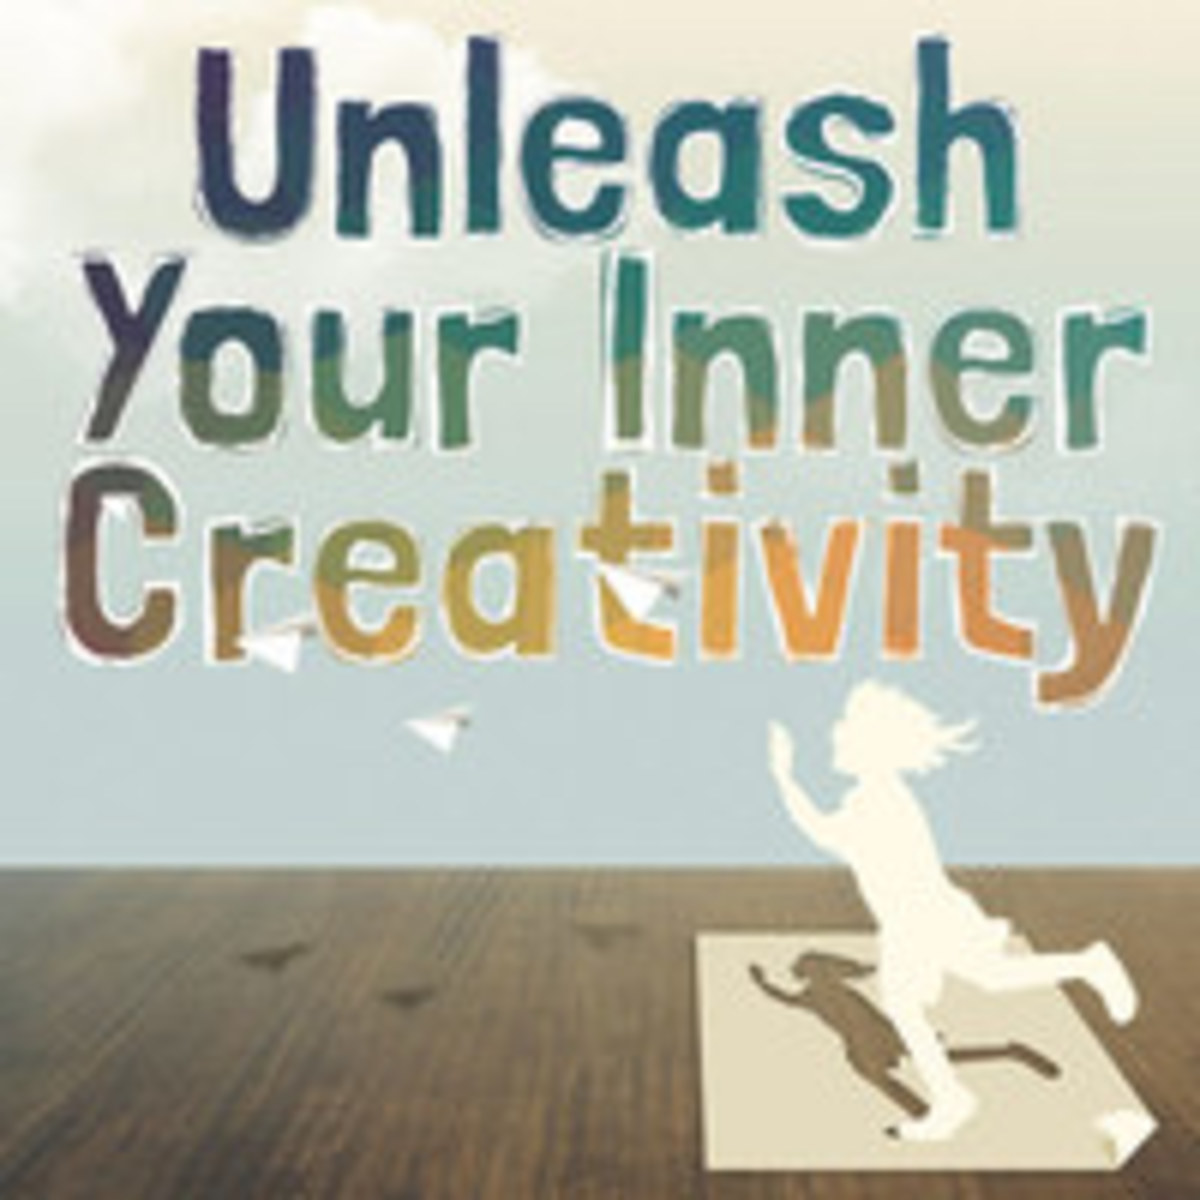 Unleash Your Inner Creativity